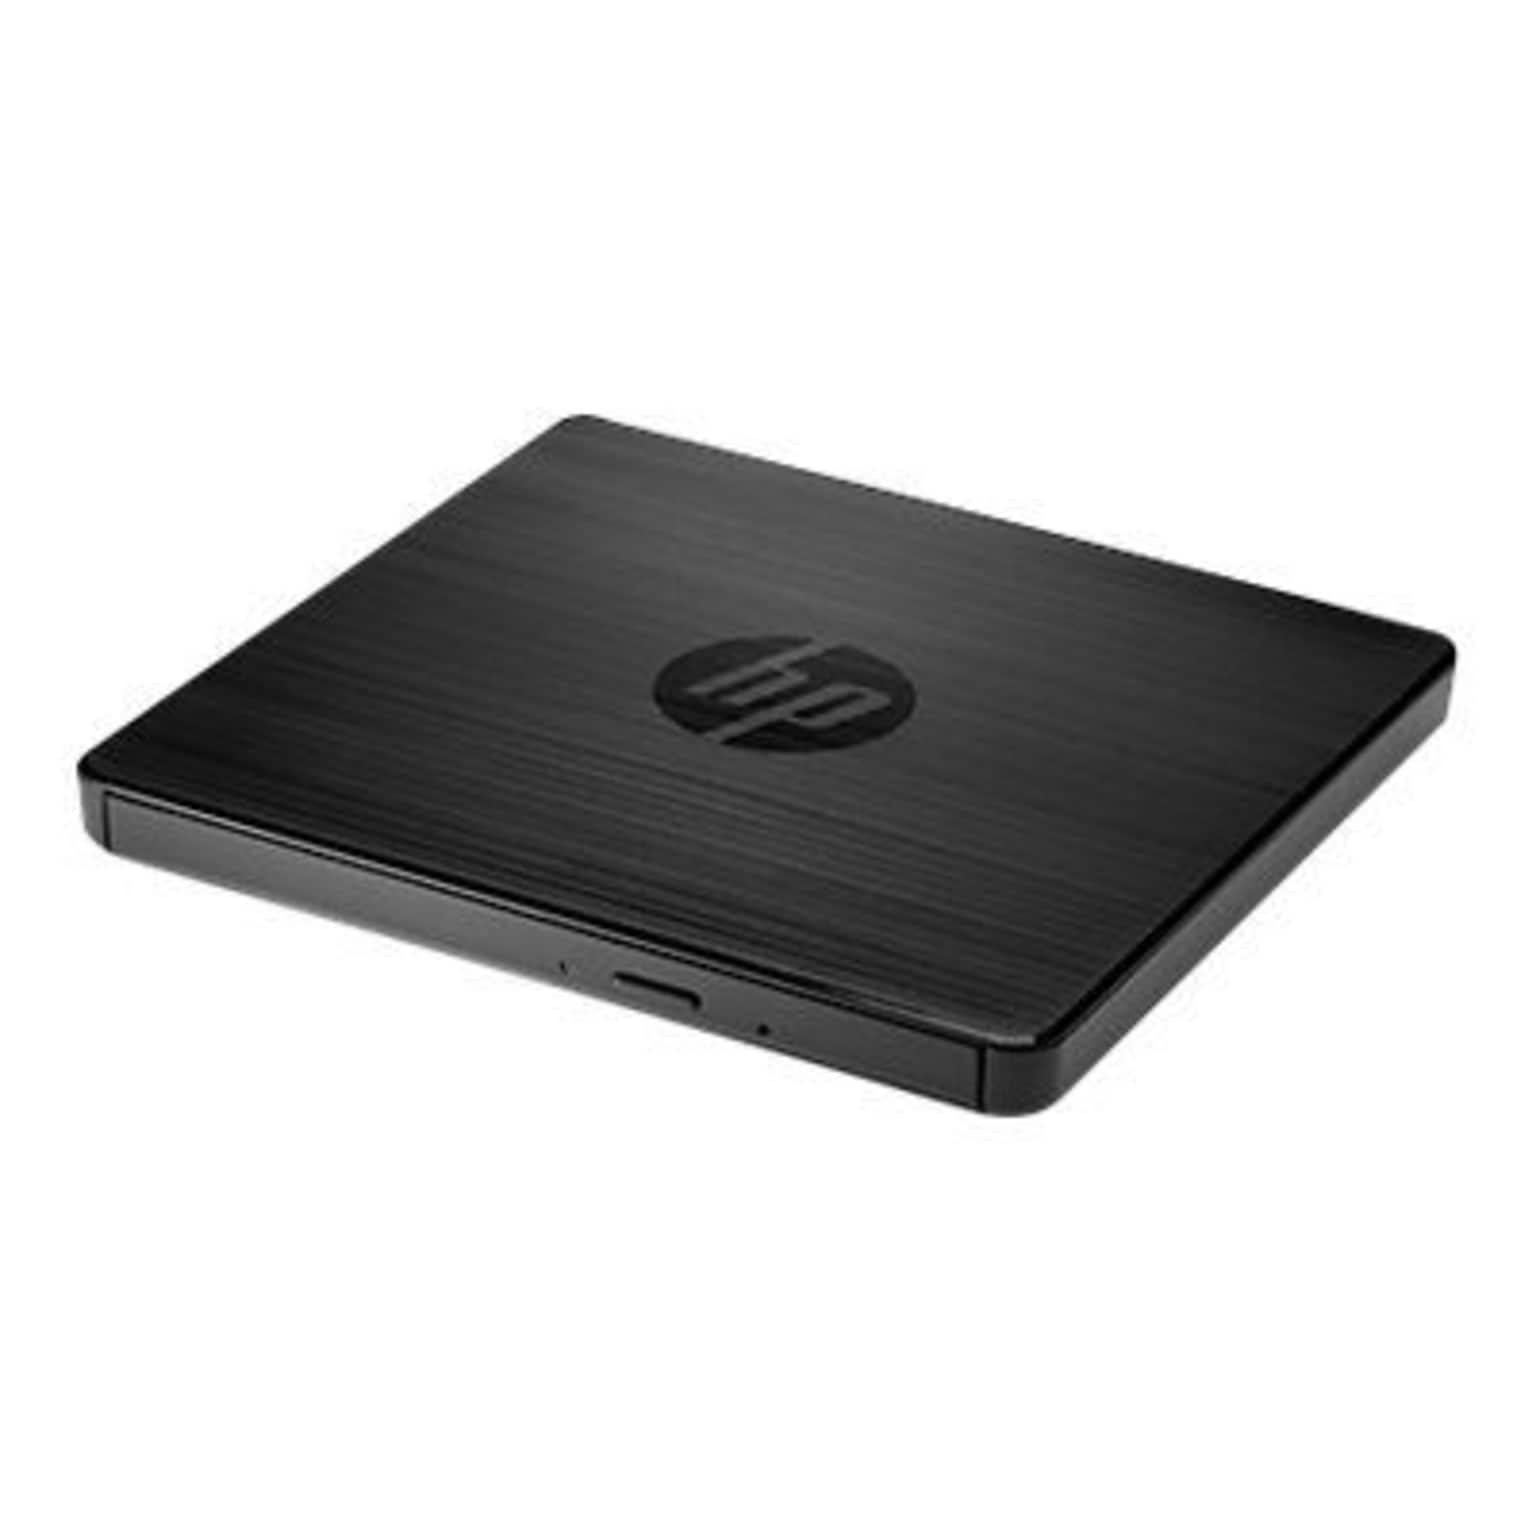 HP® SmartBuy F2B56UT USB External DVDRW Drive